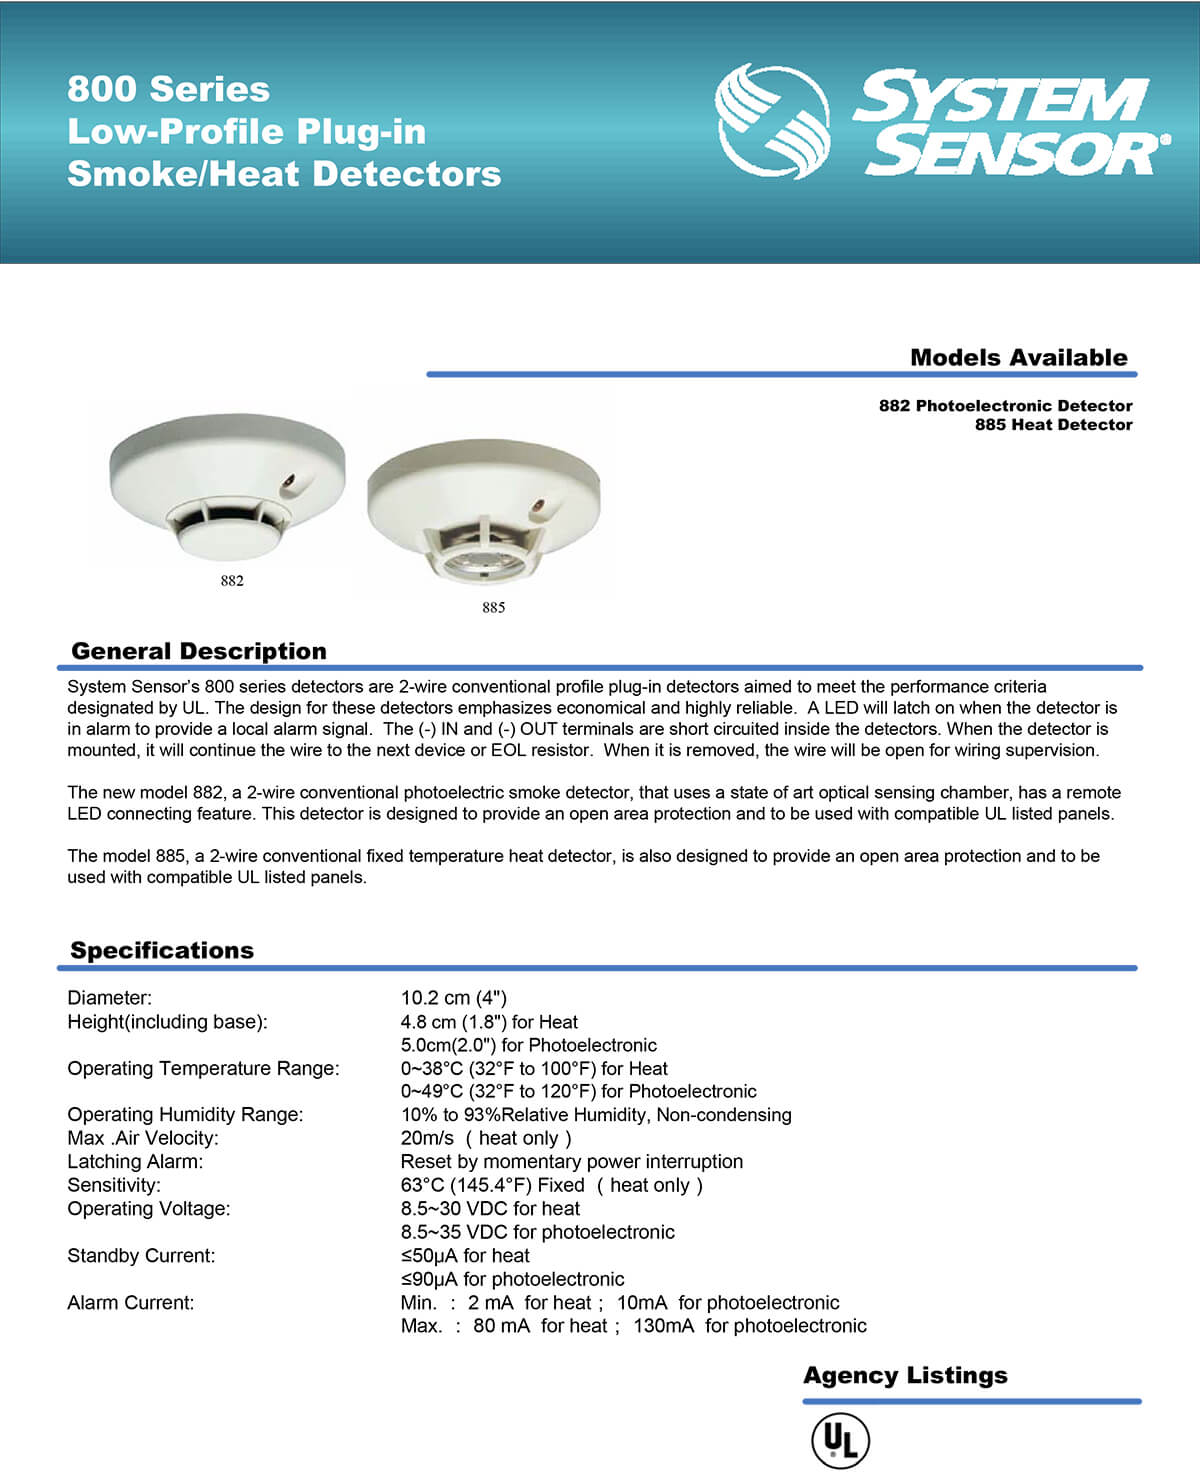 Low-Profile Plug-in Smoke/Heat Detector 800 Series